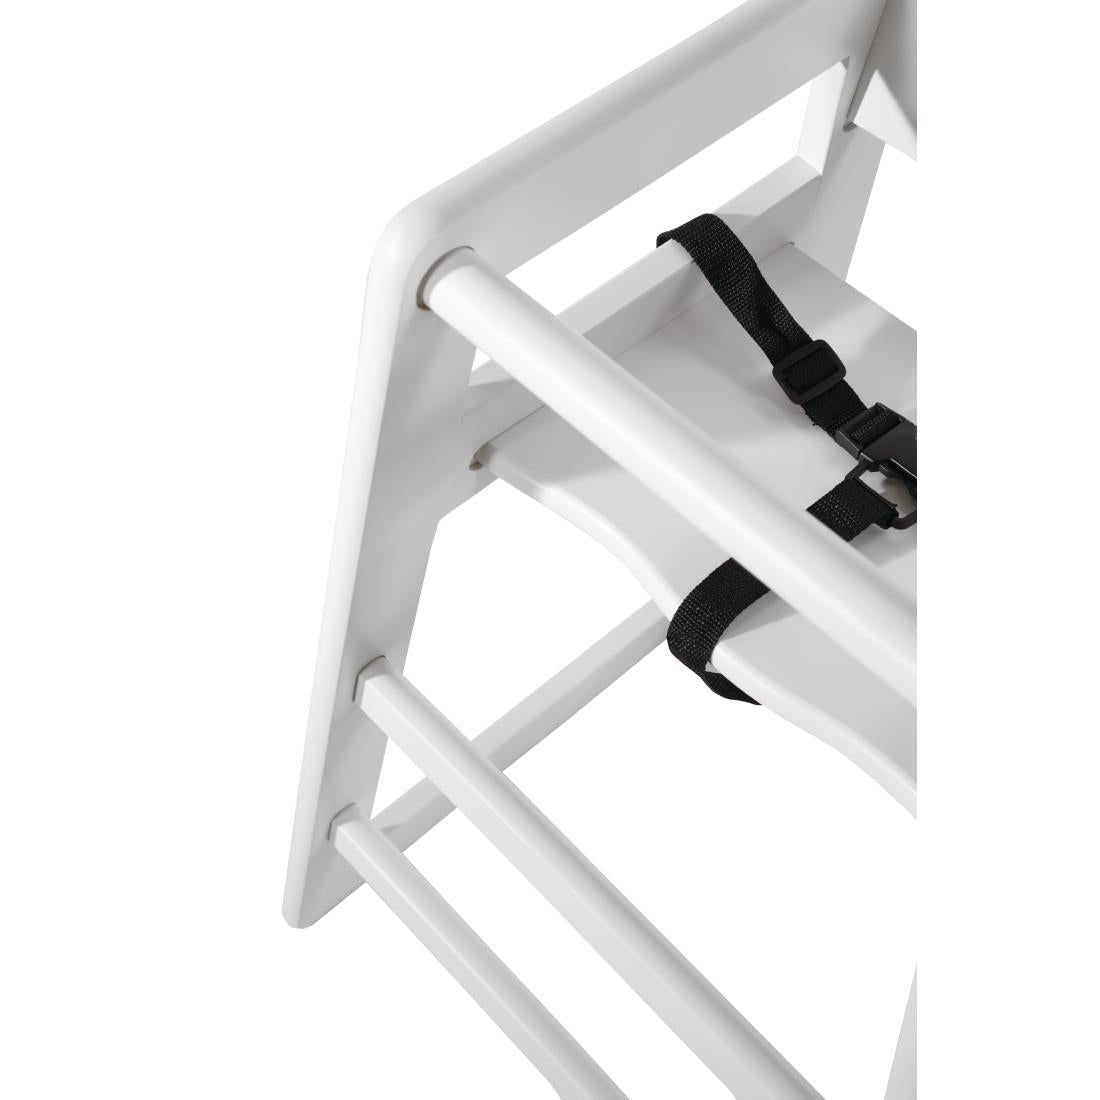 Bolero Wooden Highchair (Antique White) JD Catering Equipment Solutions Ltd